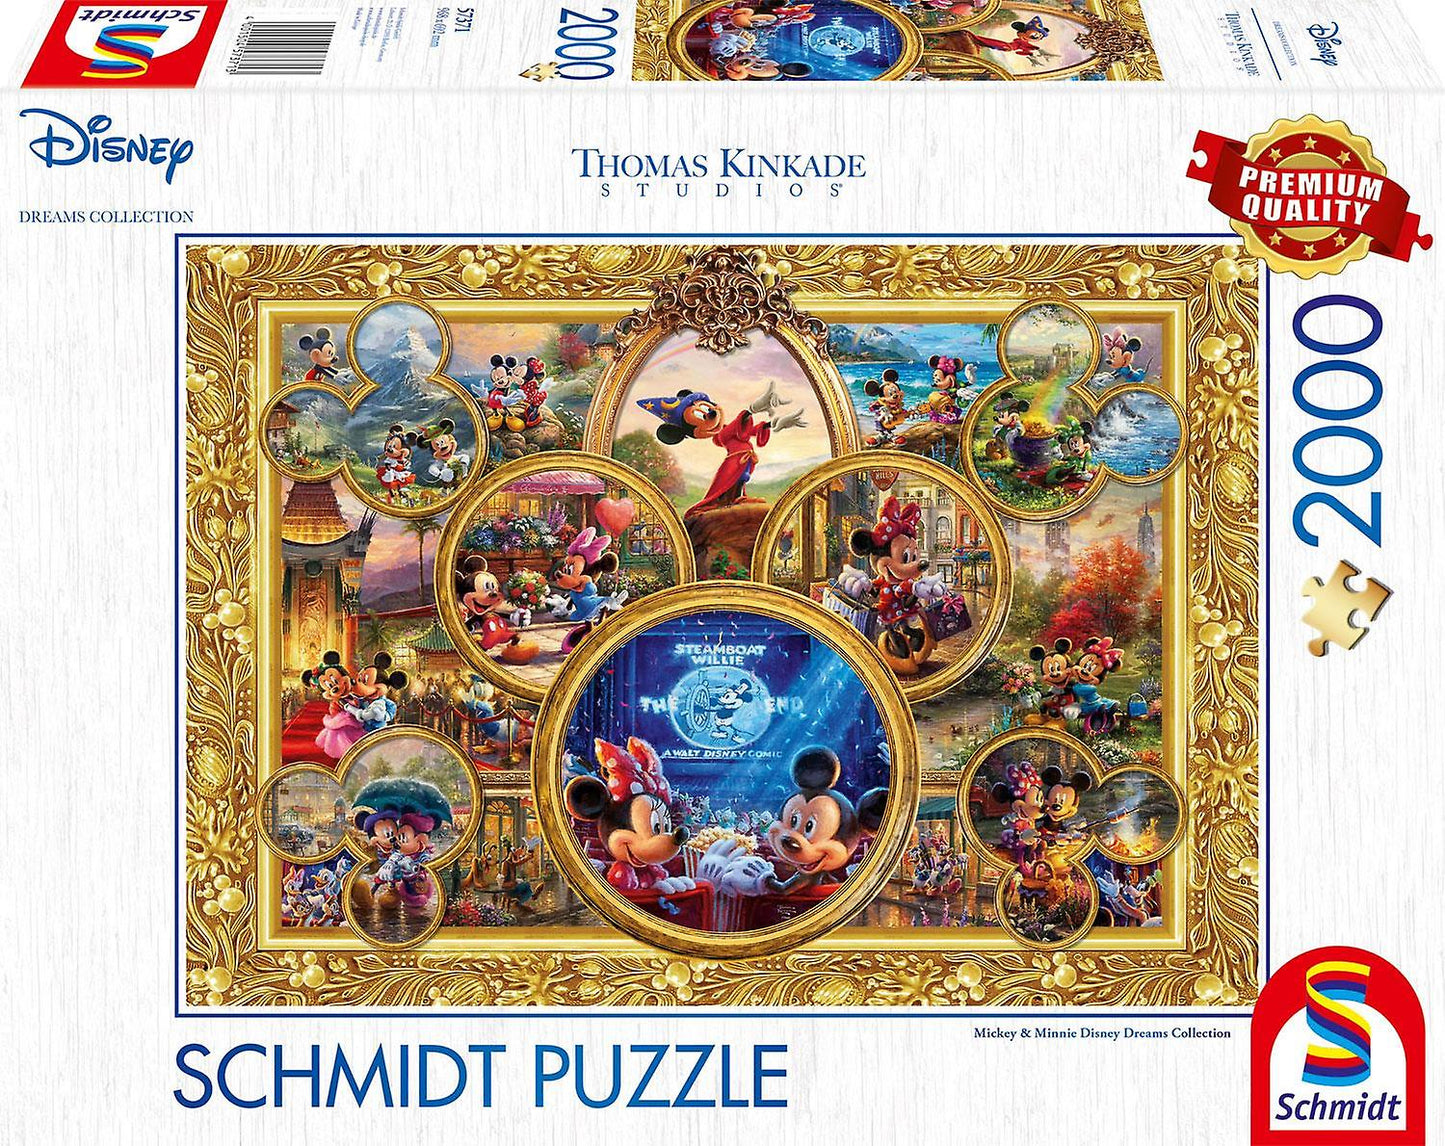 Mickey & Minnie Disney Dreams Collection by Thomas Kinkade, 2000 Piece Puzzle